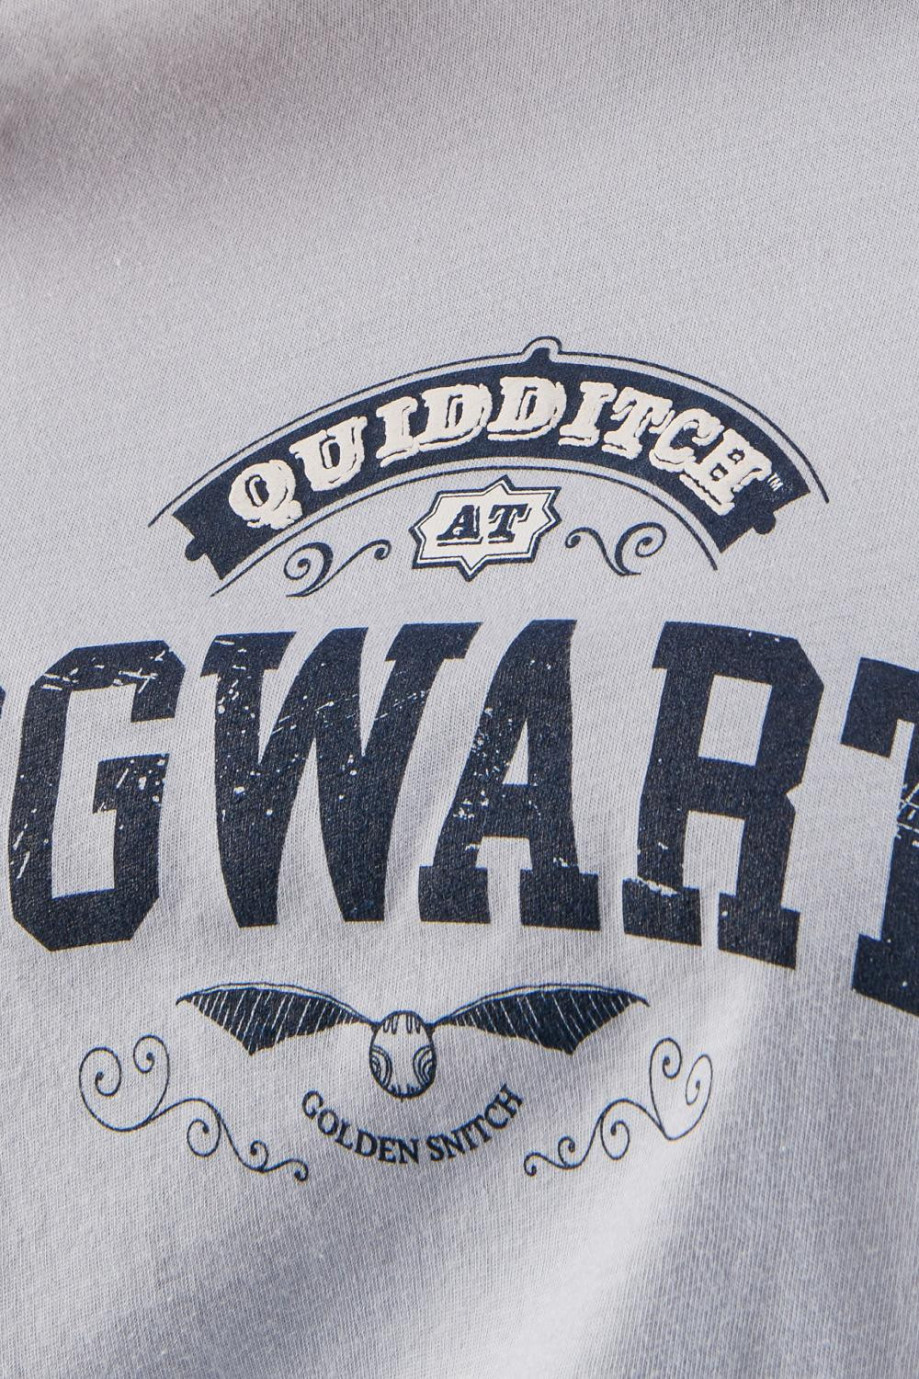 Camiseta manga corta estampado de Harry Potter.